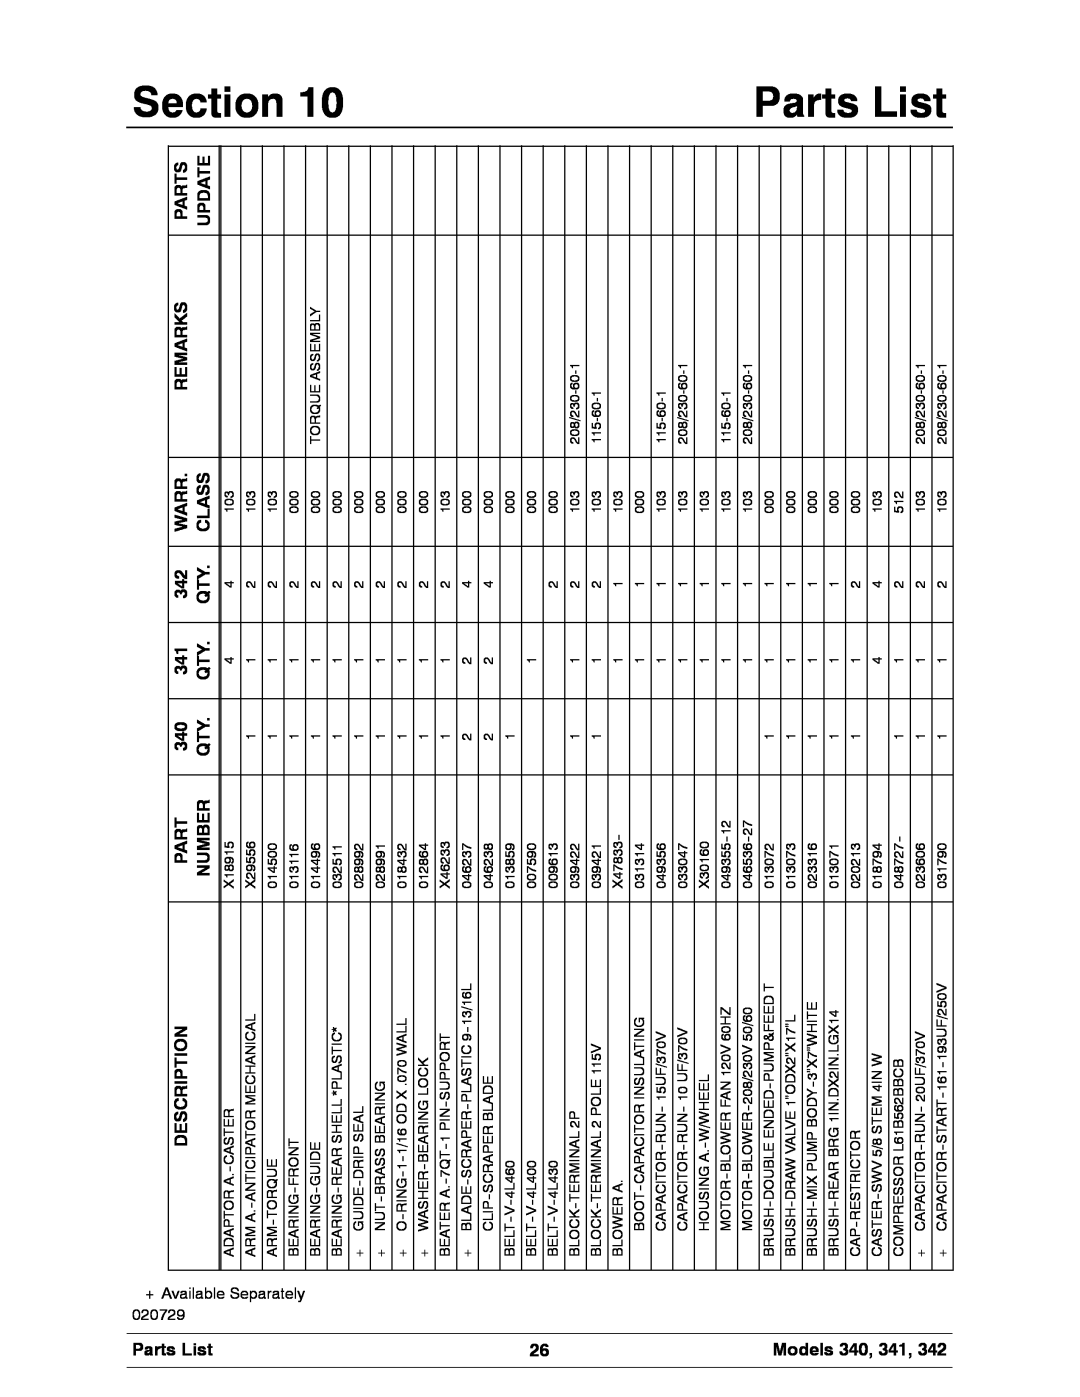 Taylor 342 manual Section Parts List, Models 340, 341, Description, Warr, Remarks, Number, Class, Update 